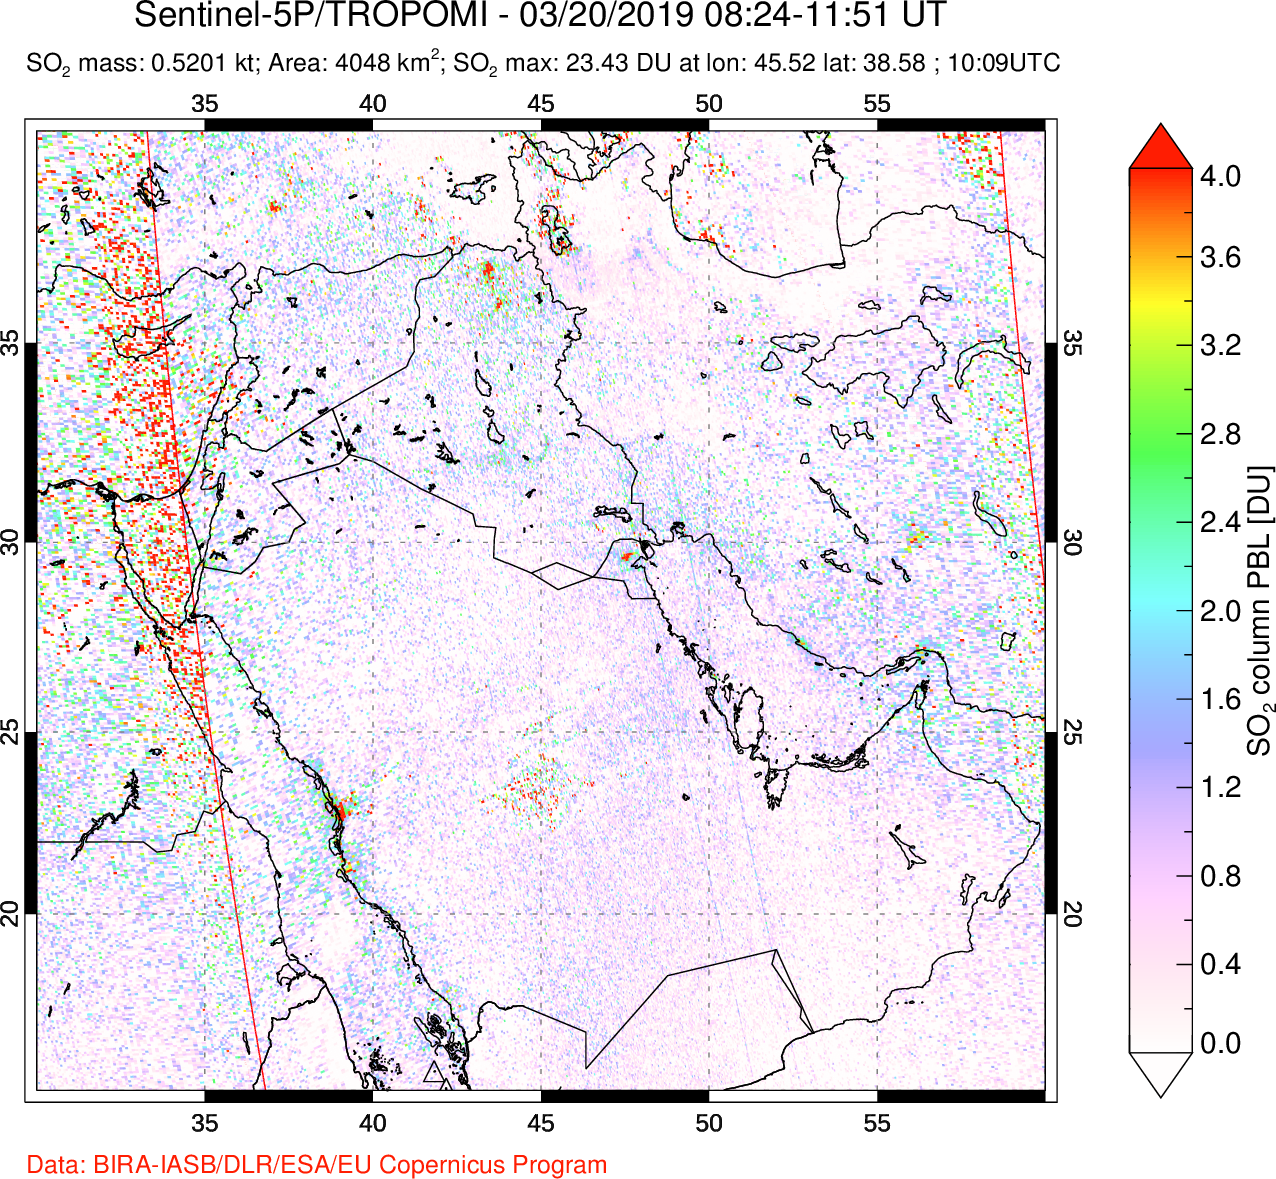 A sulfur dioxide image over Middle East on Mar 20, 2019.